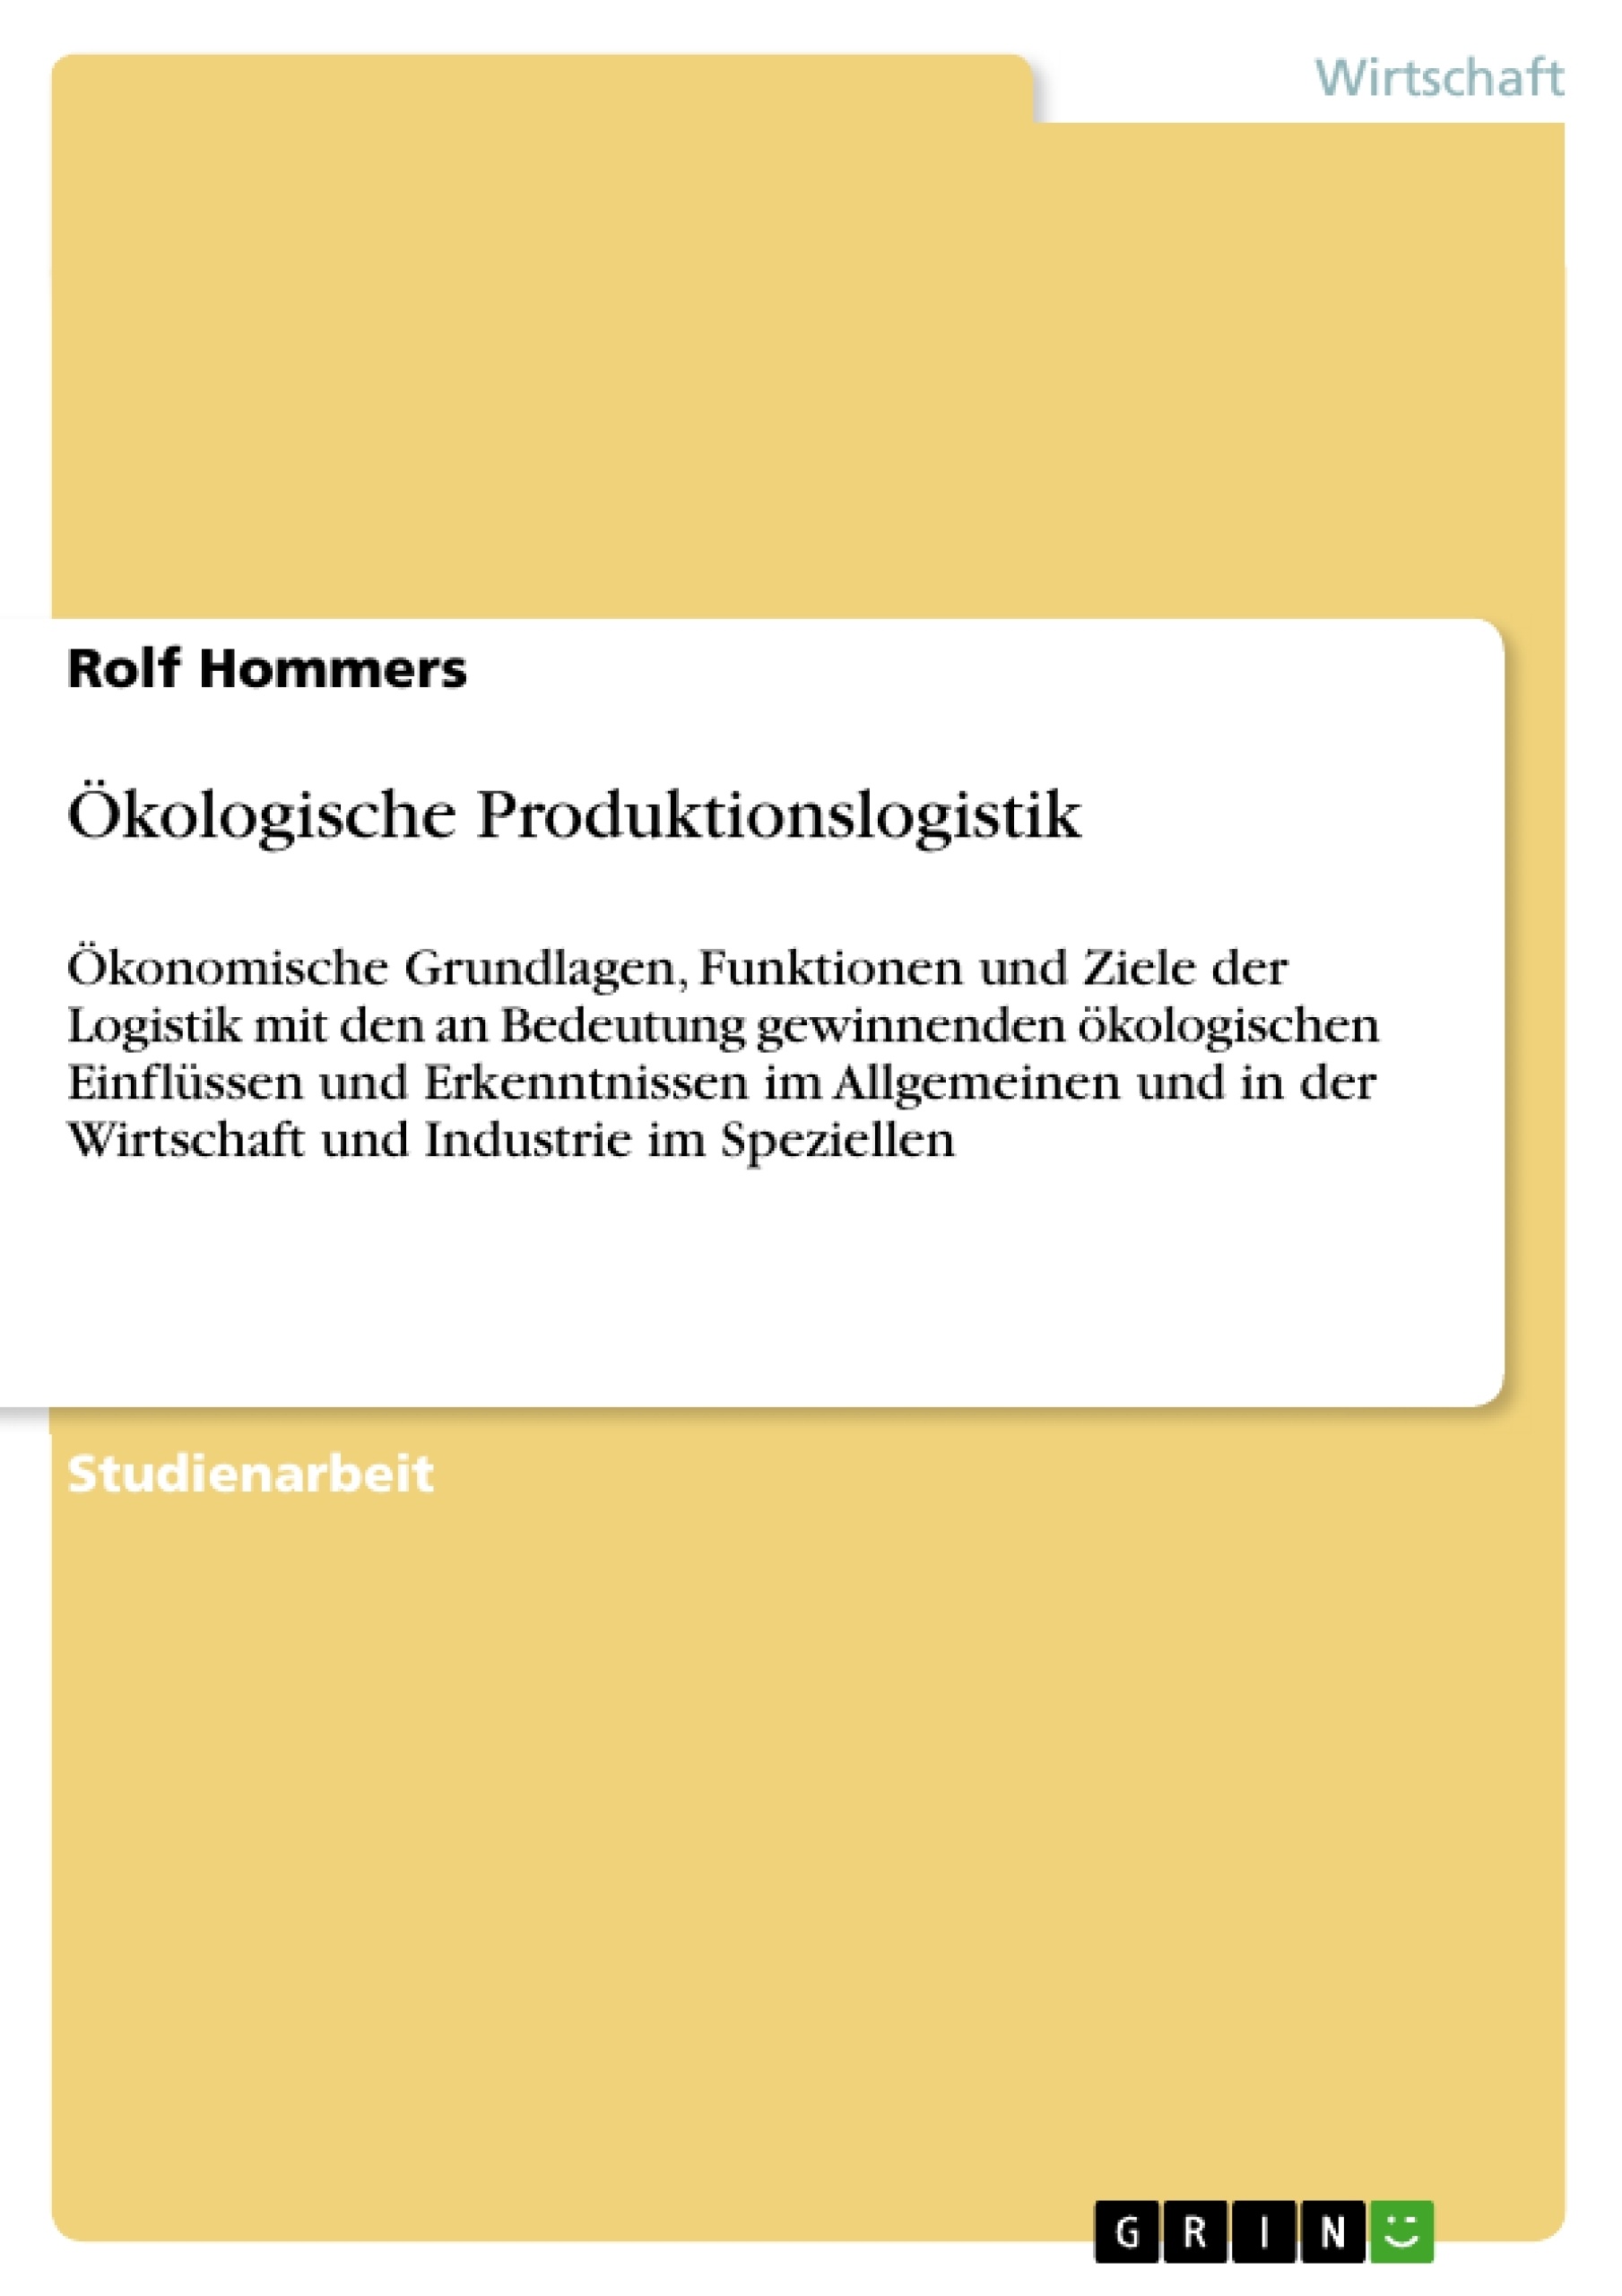 Titre: Ökologische Produktionslogistik